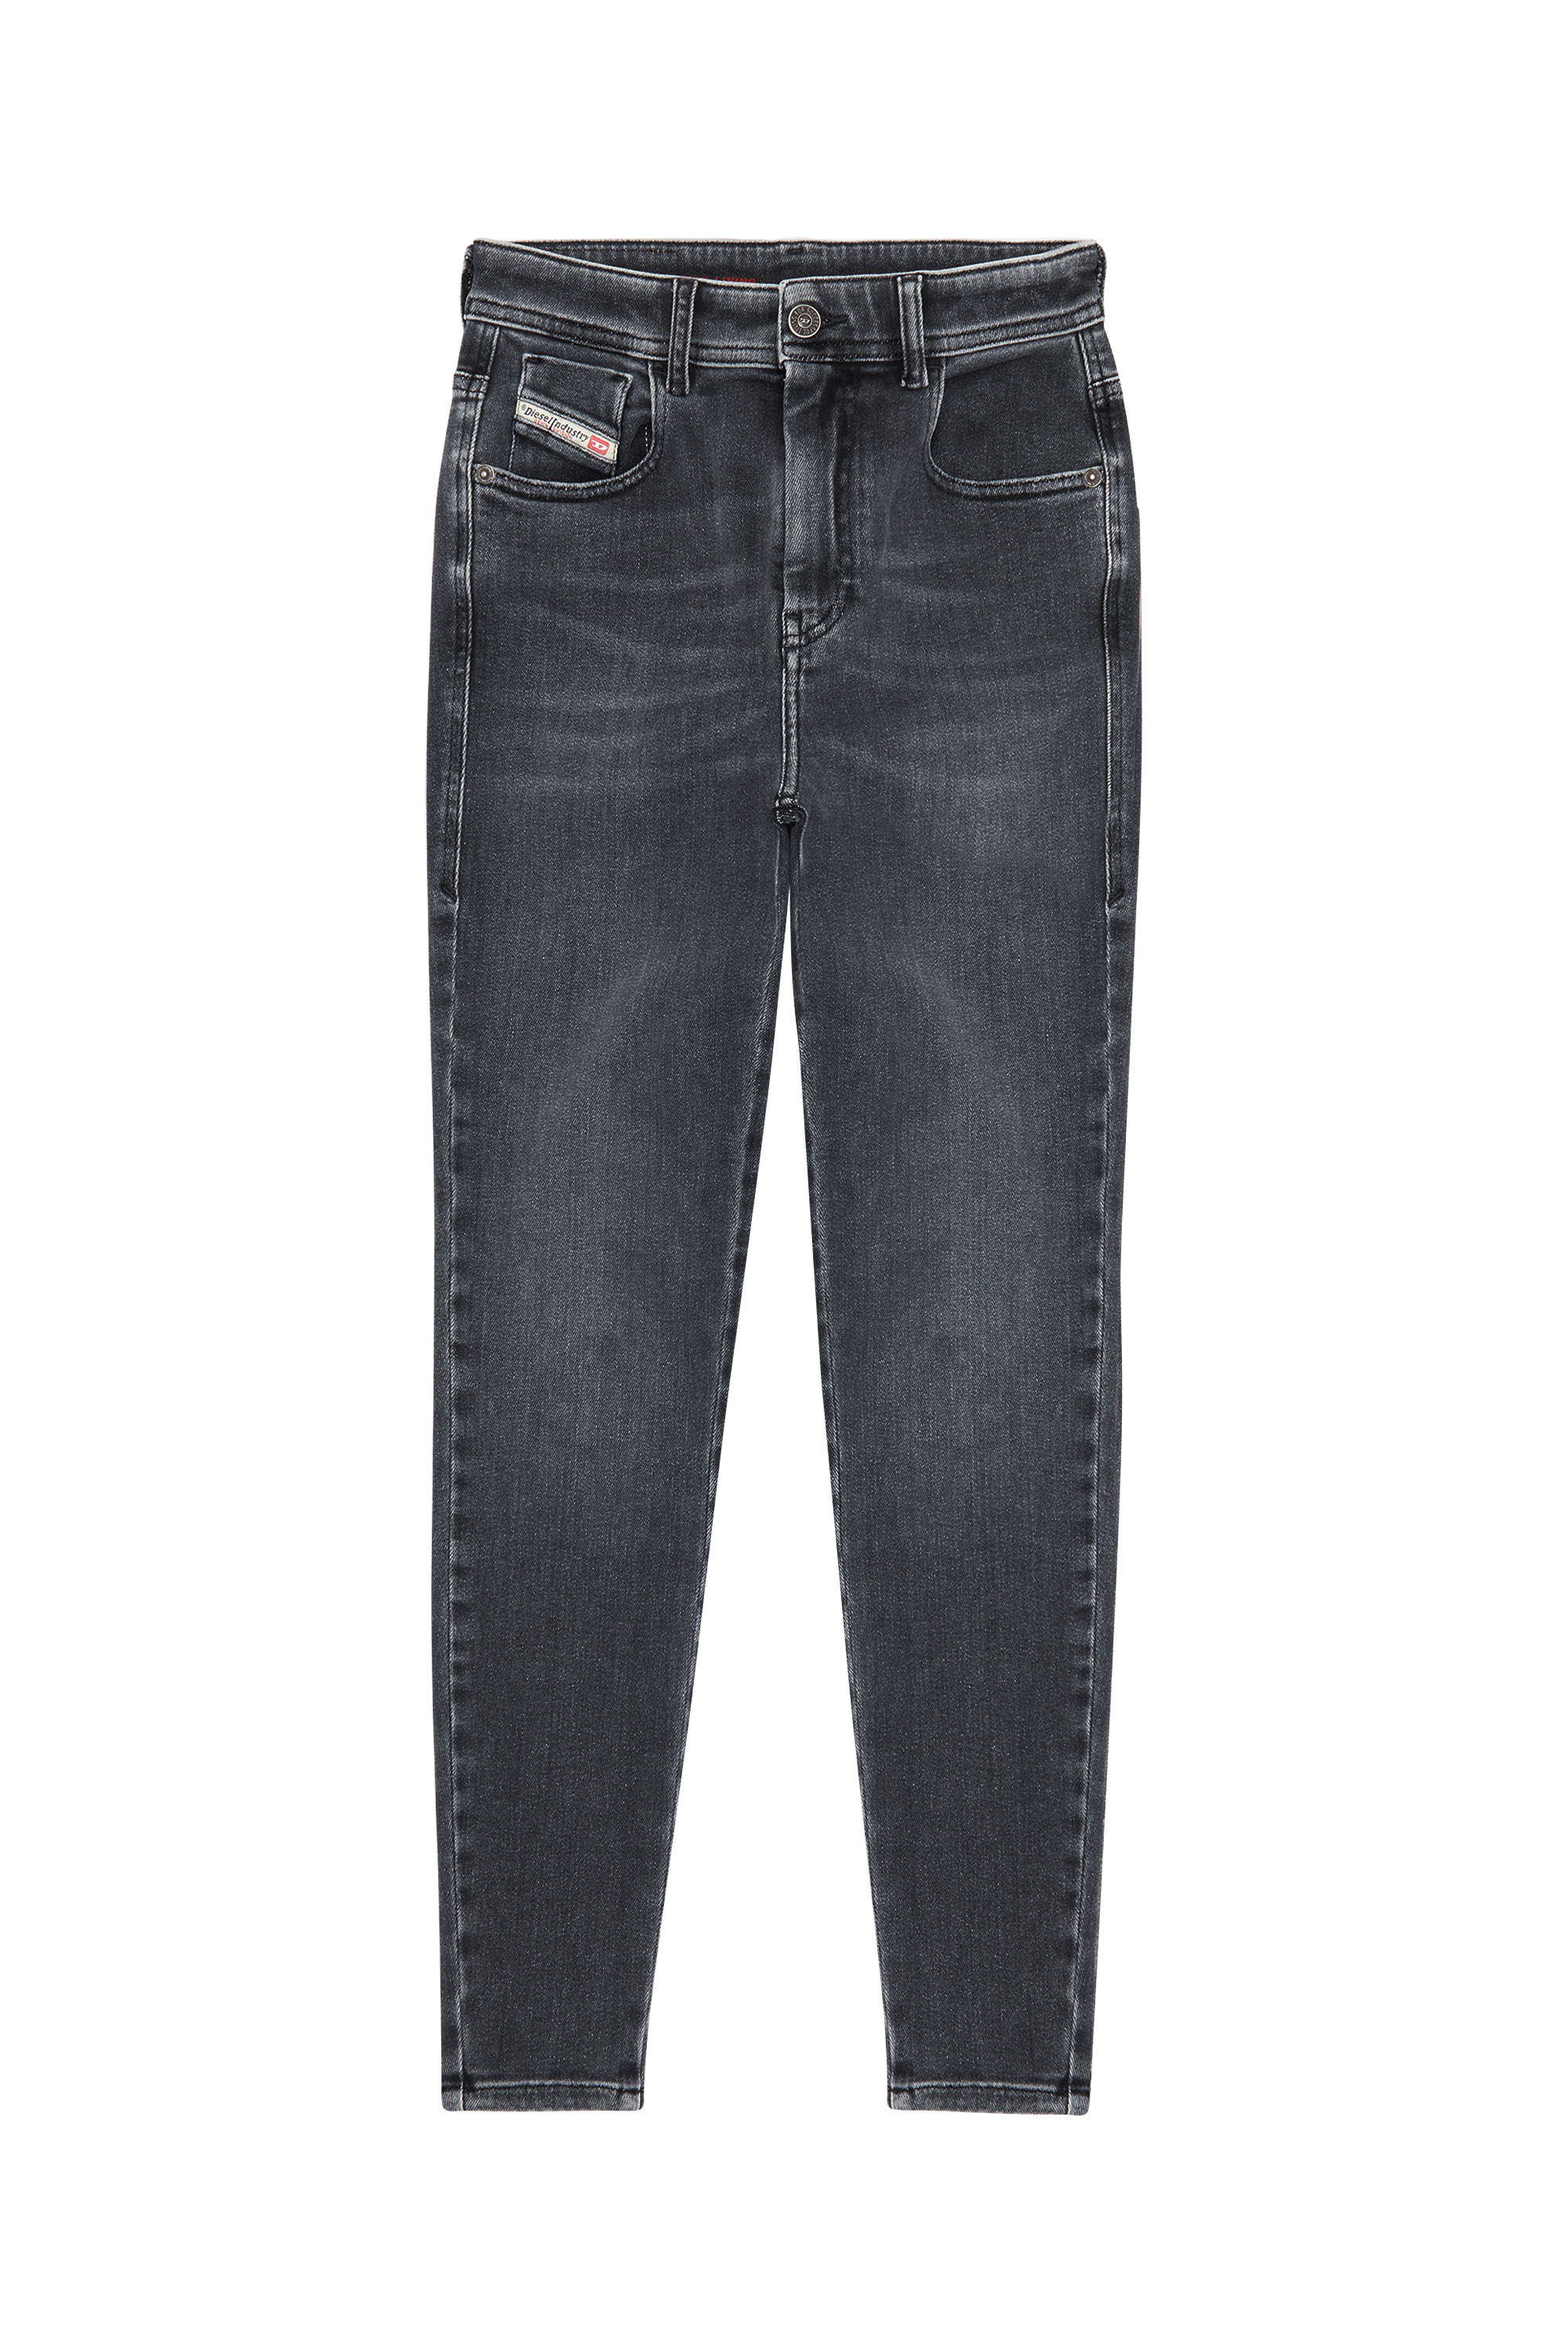 1984 Slandy high 09D61 Super skinny Jeans, Black/Dark grey - Jeans